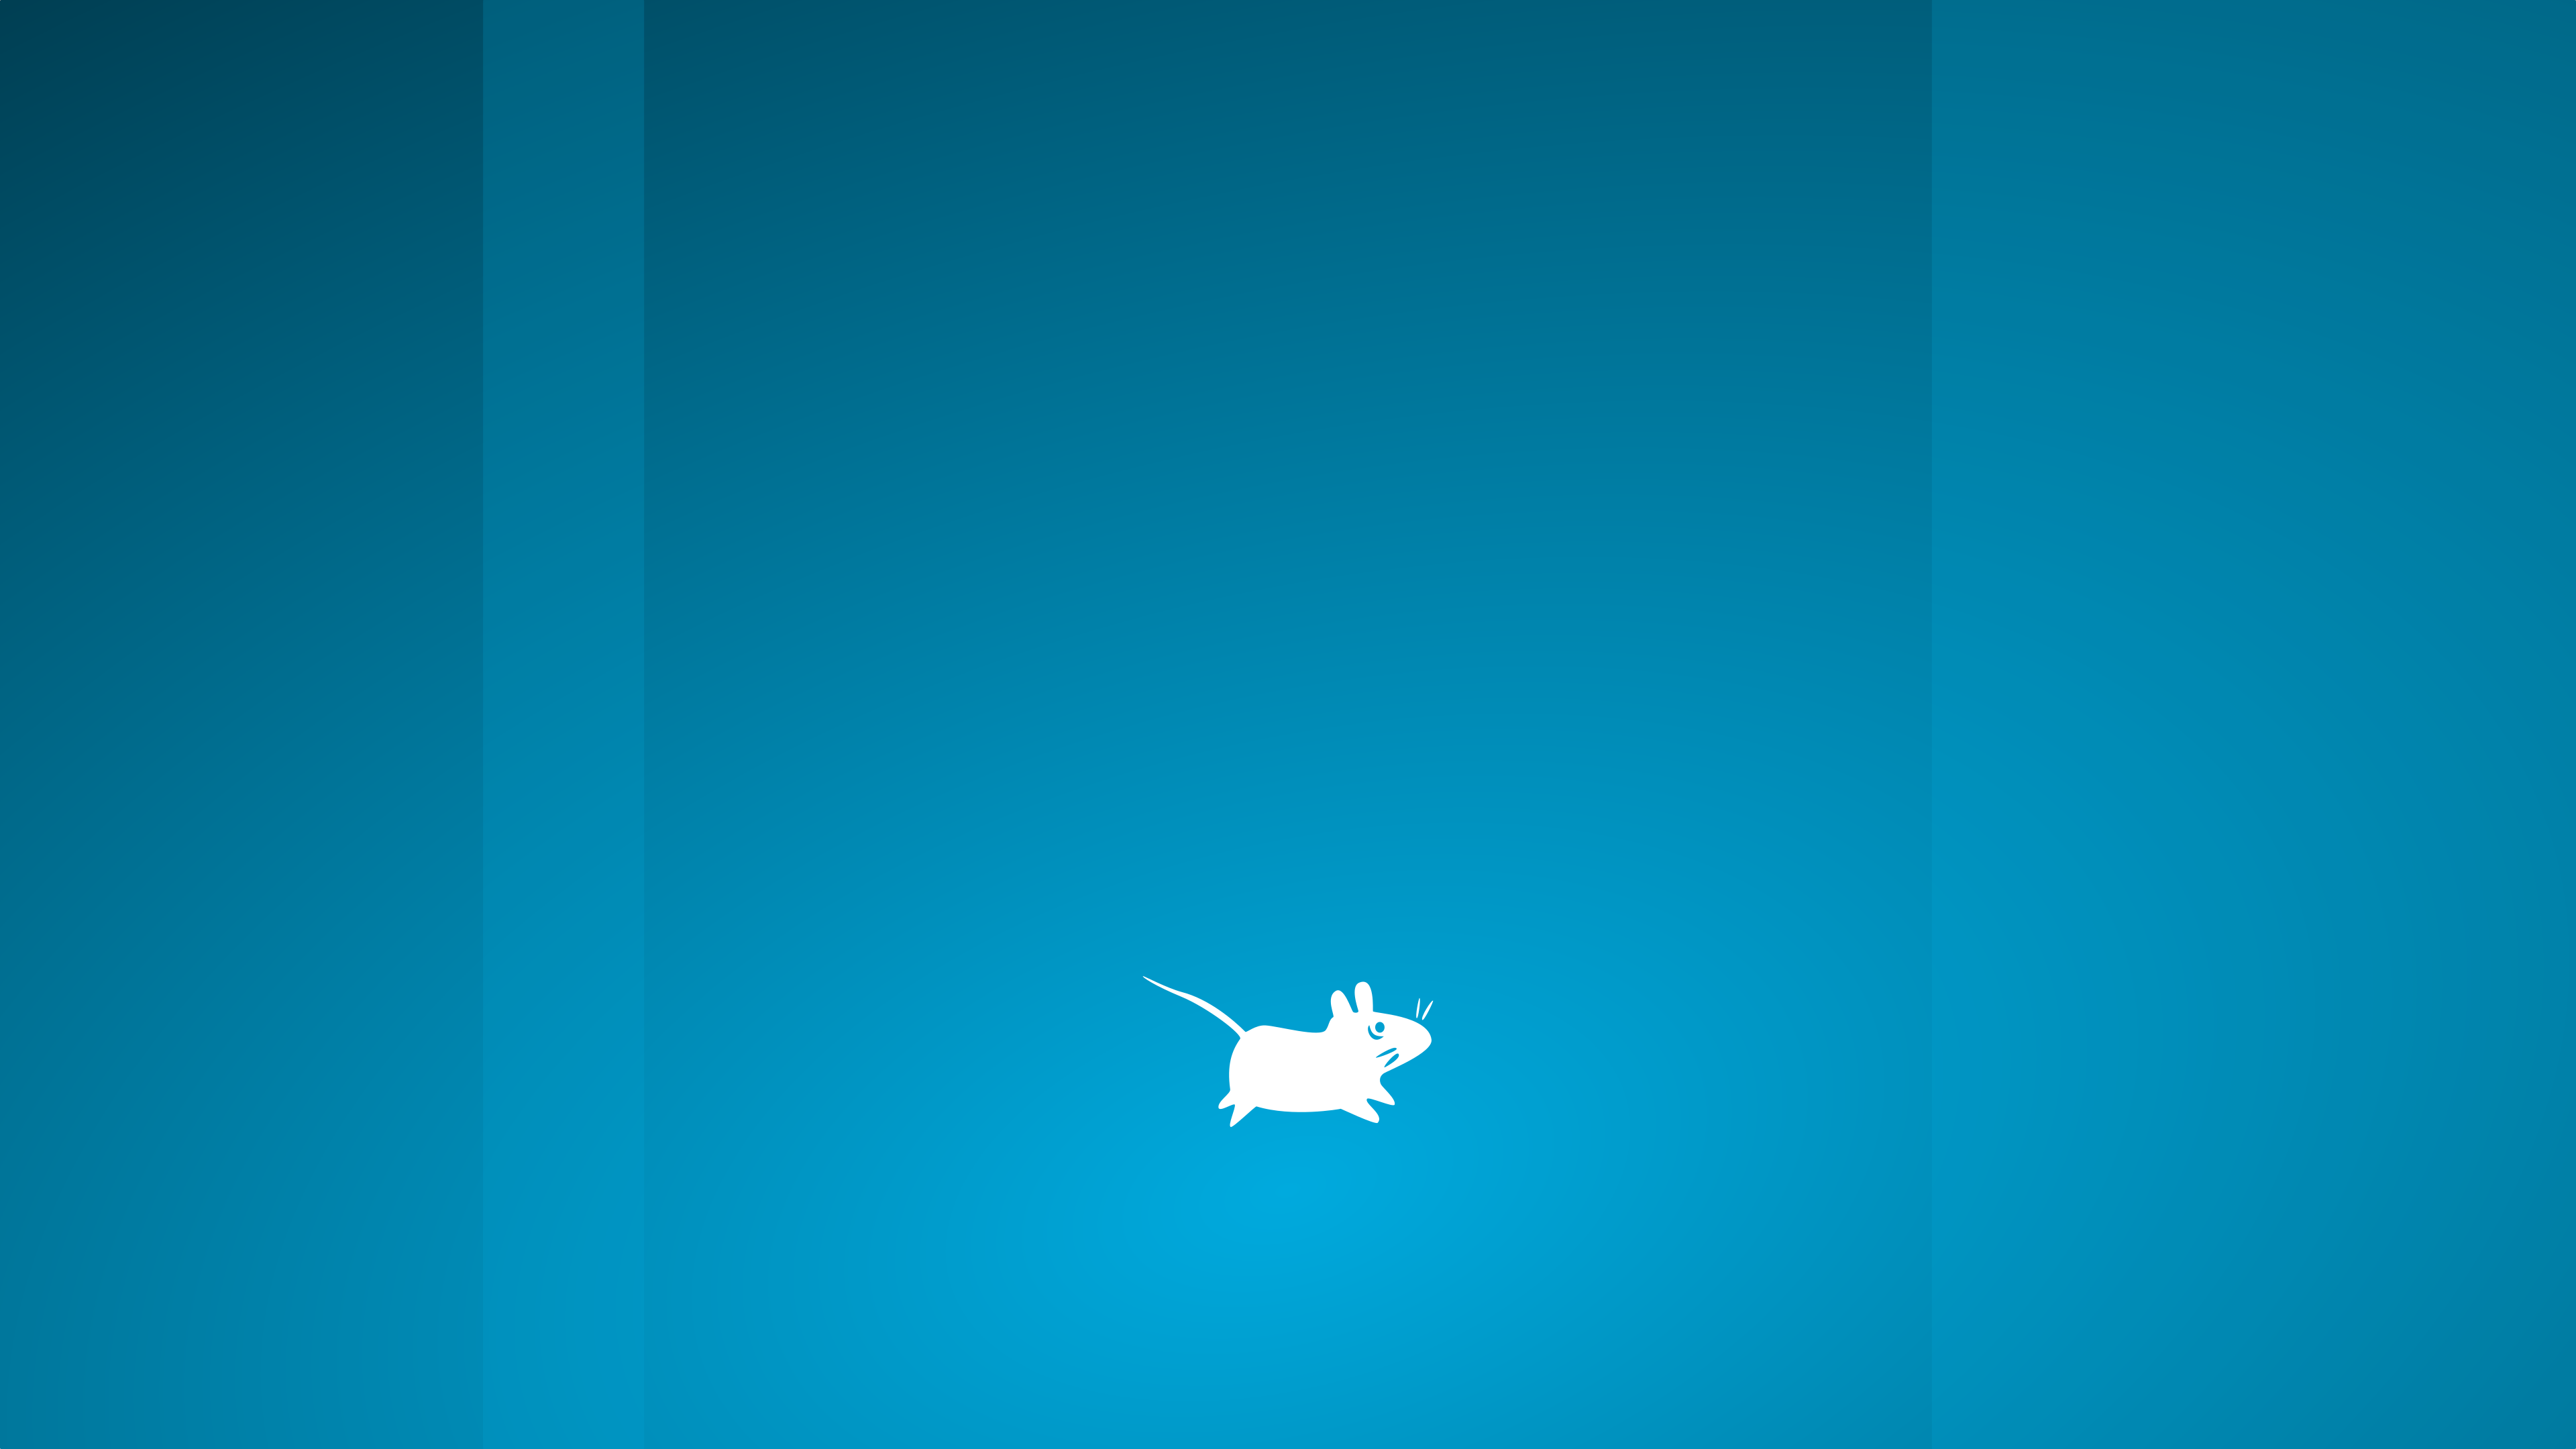 General 3840x2160 Xfce blue background minimalism Linux simple background mice animals